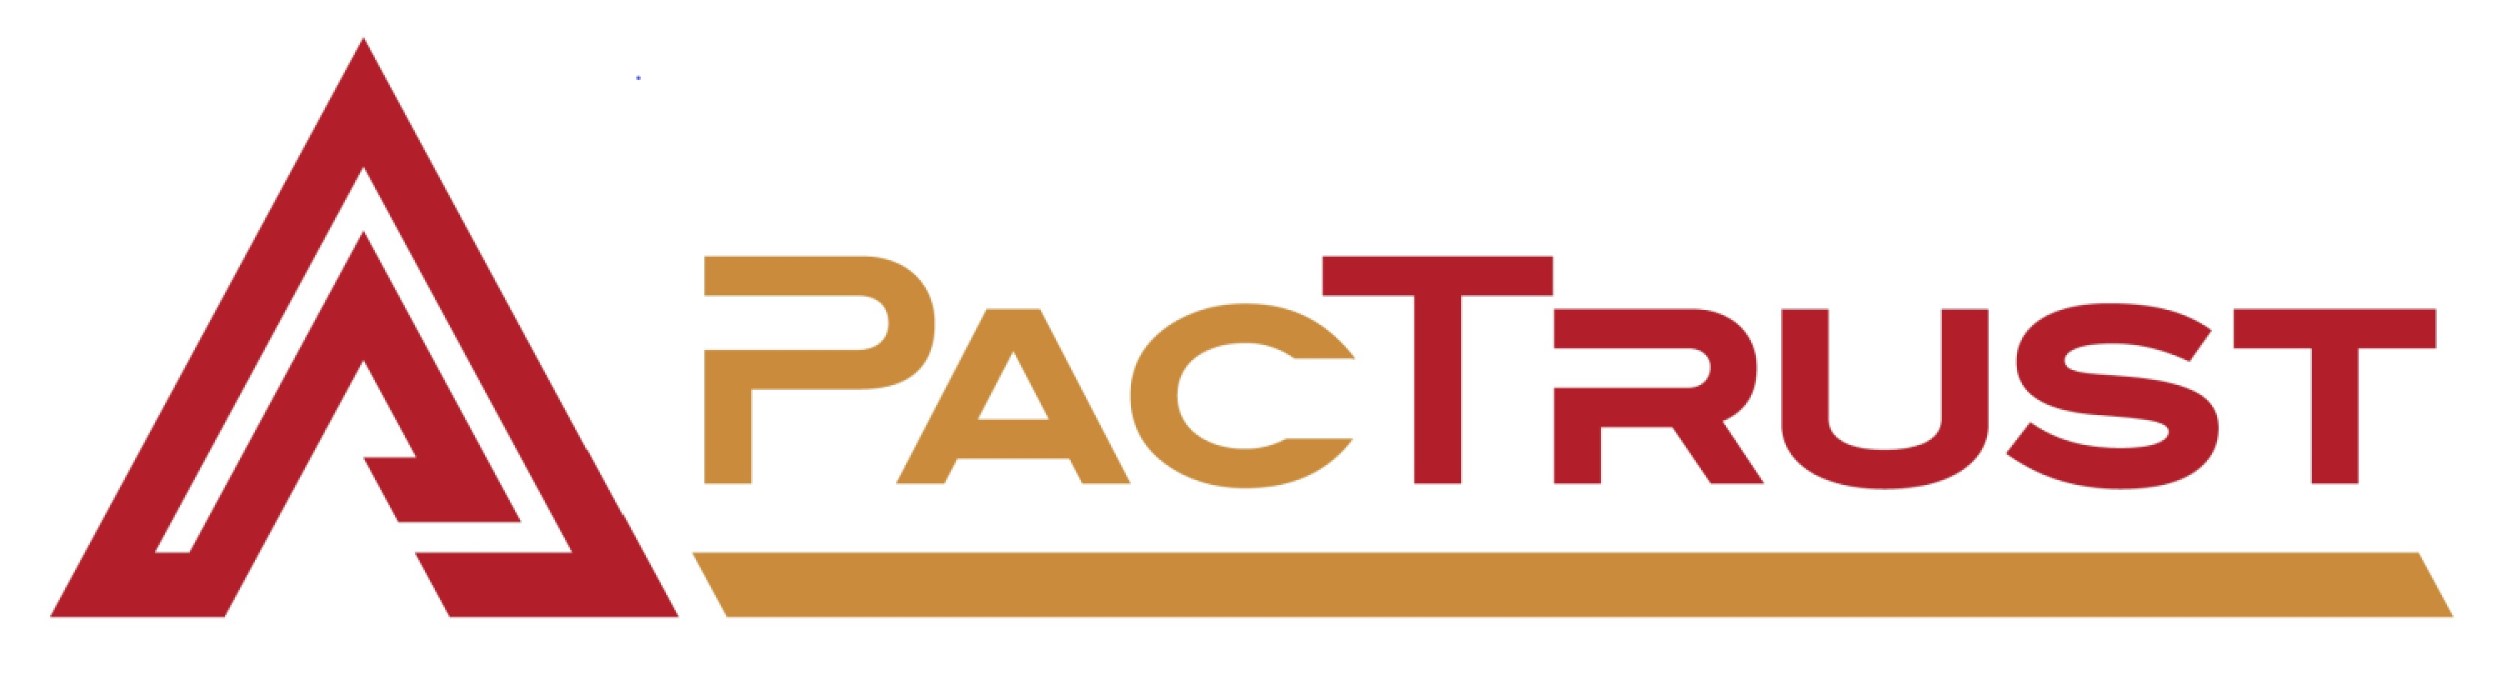 Apactrust Corporate Services Pte. Ltd. logo